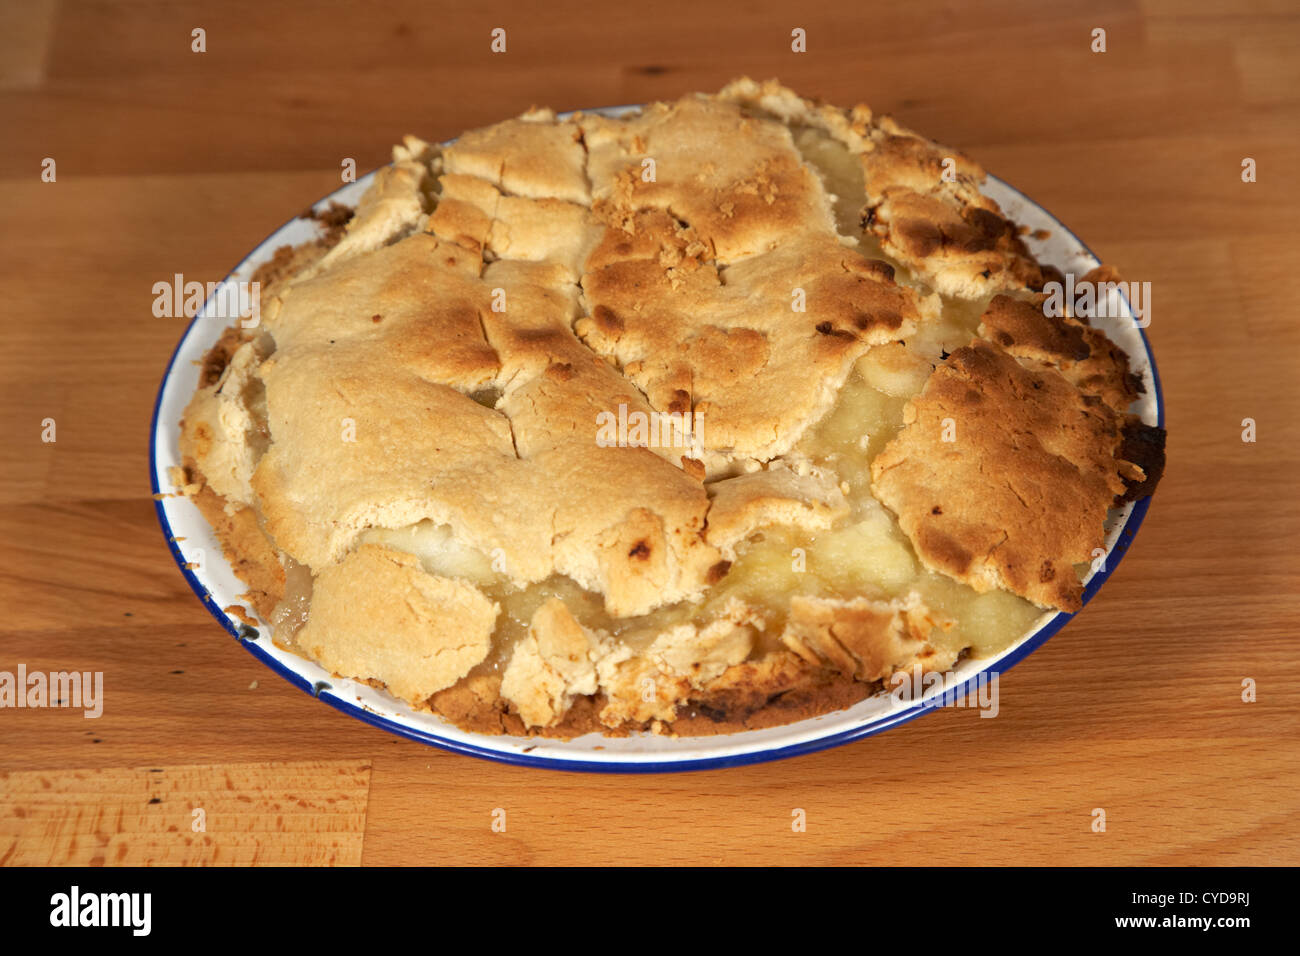 https://c8.alamy.com/comp/CYD9RJ/homemade-rustic-cracked-crust-apple-pie-CYD9RJ.jpg